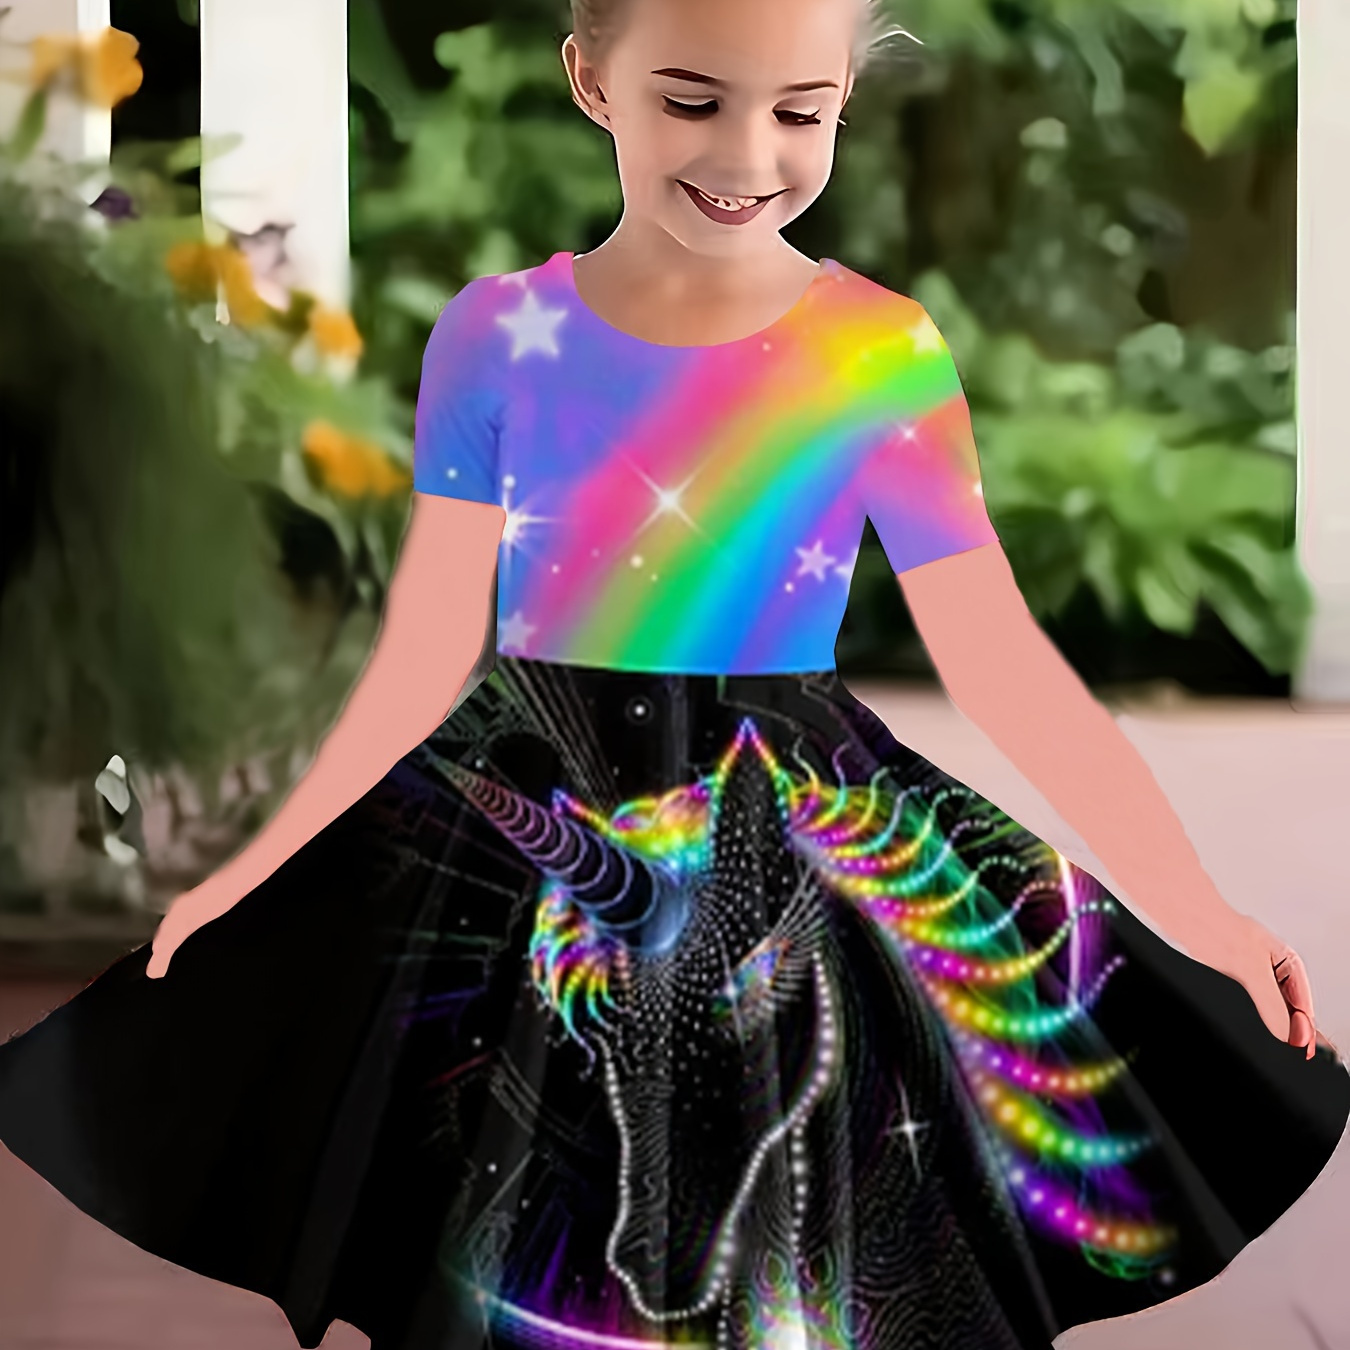 

Mysterious Unicorn 3d Print Short Sleeve Twirl Dress Girls Vacation Casual Dresses Summer Gift